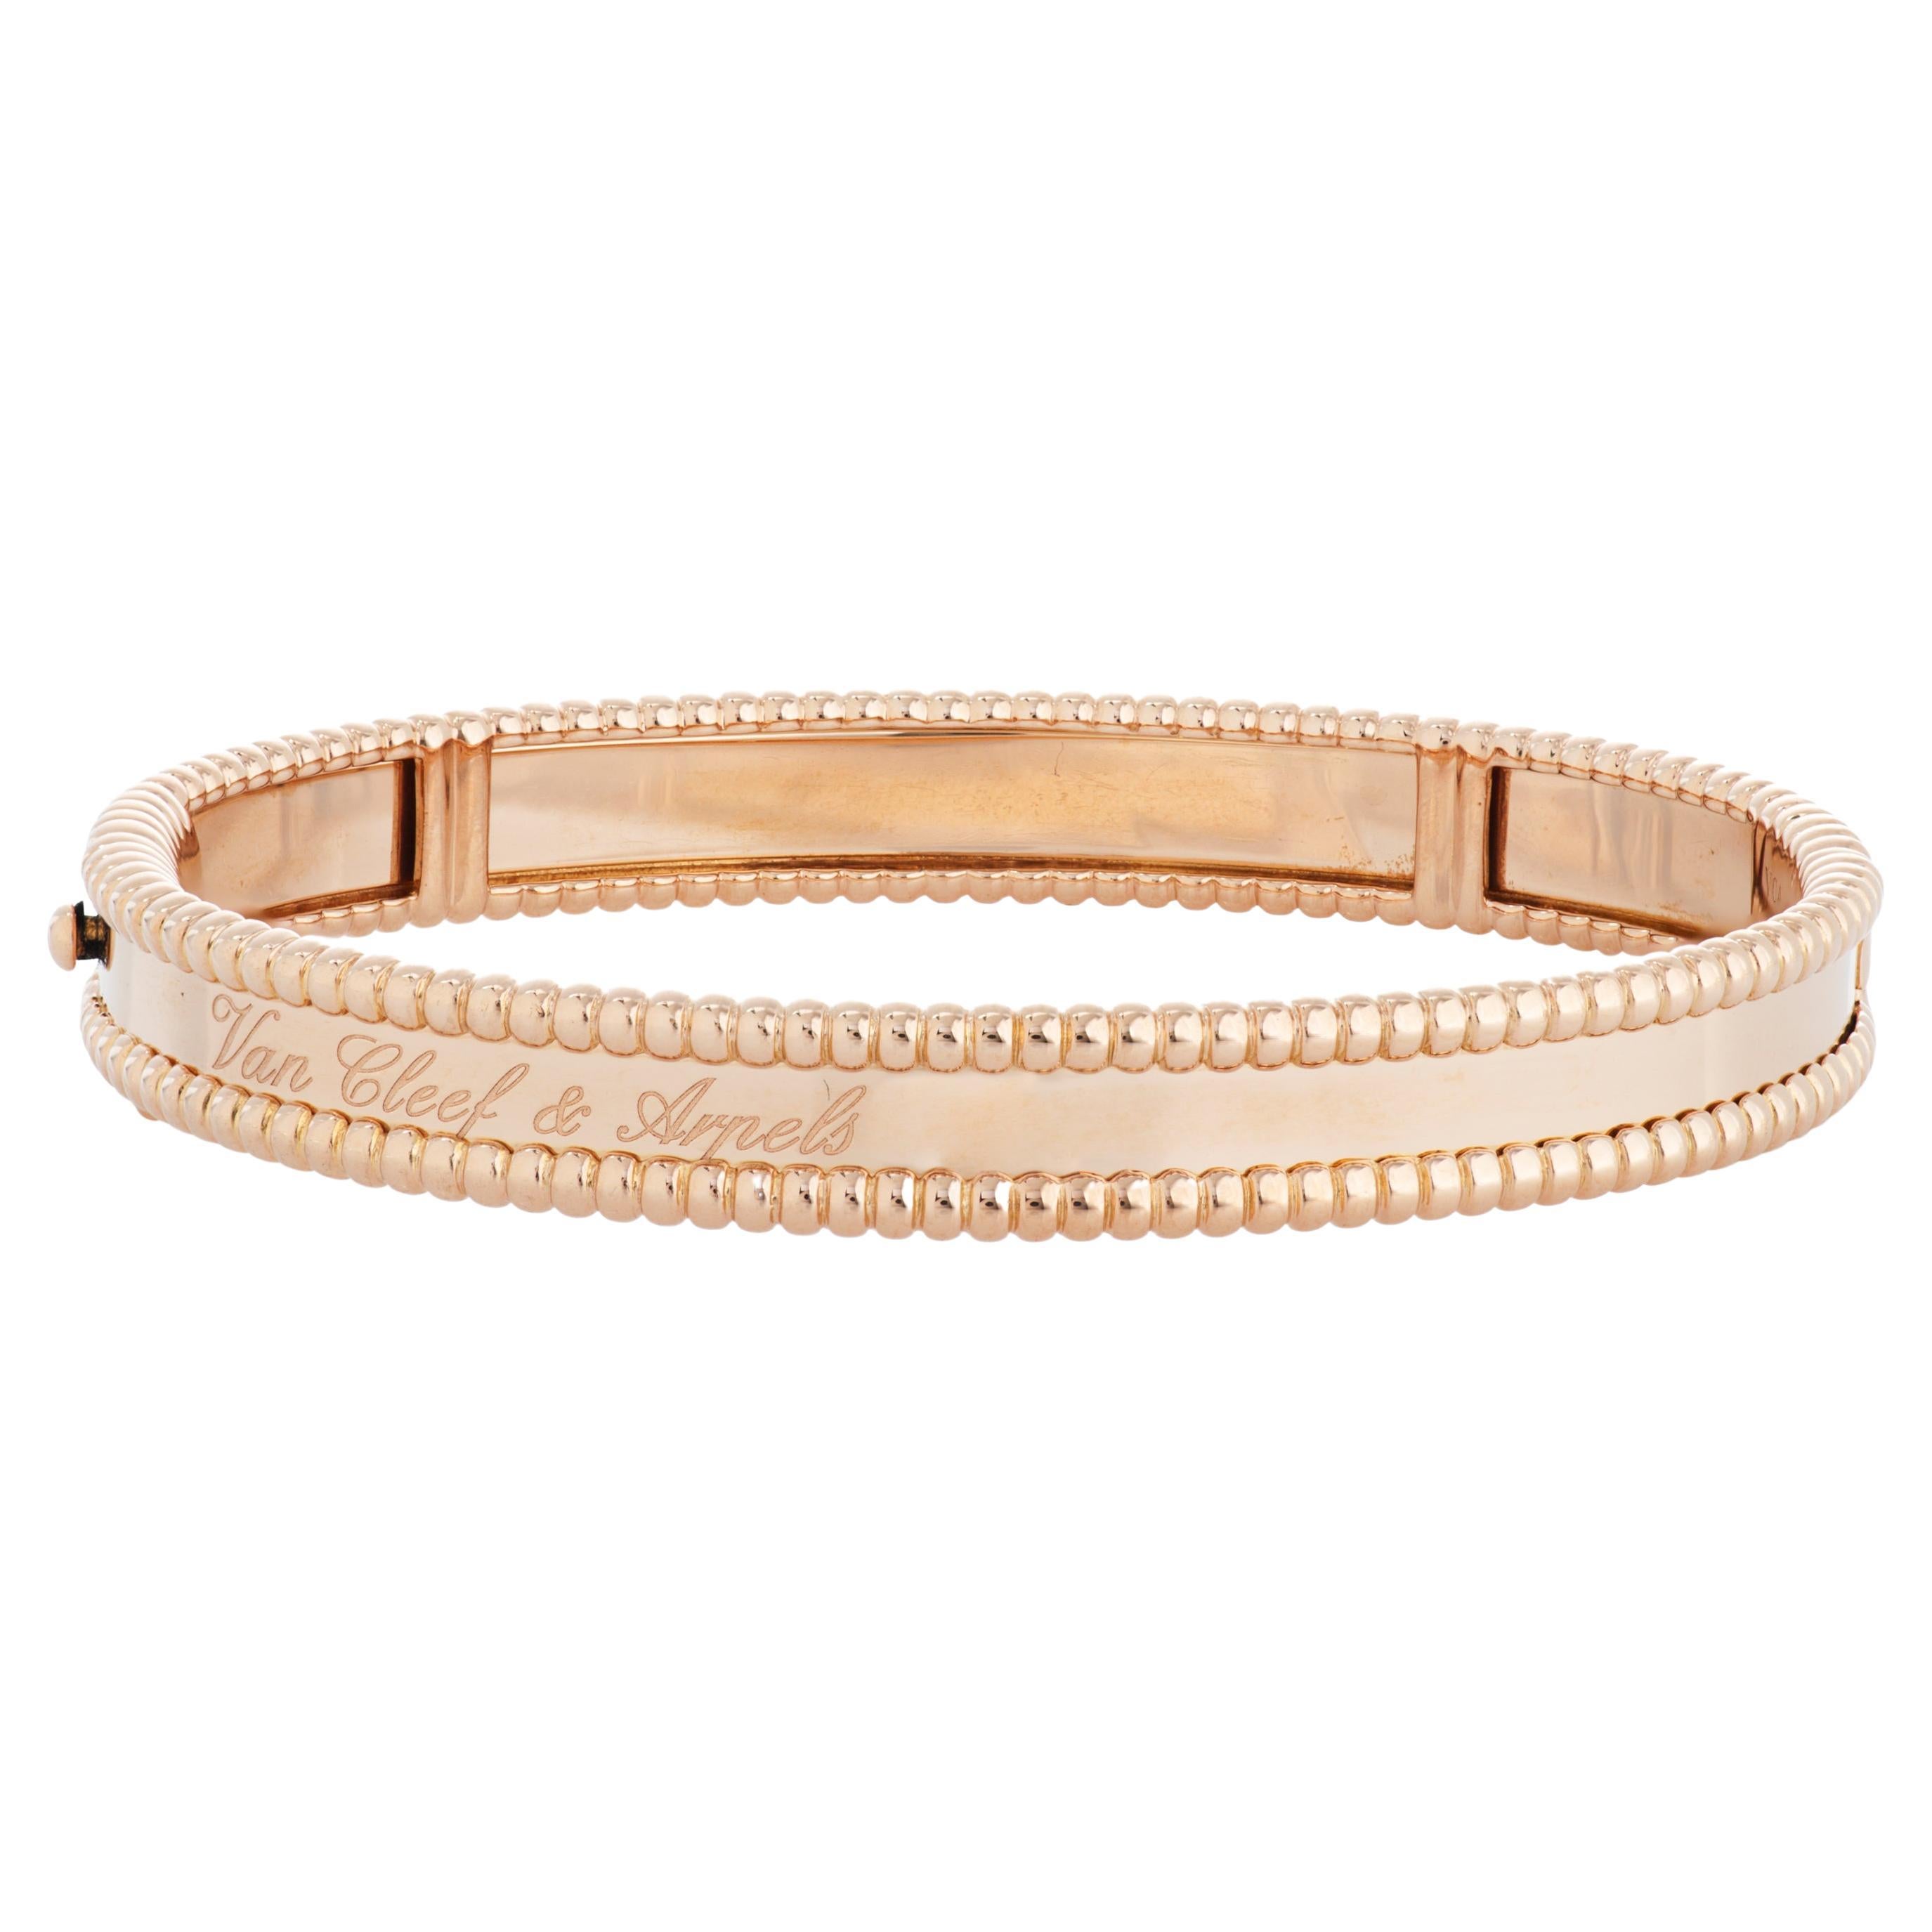 Van Cleef & Arpels Perlee Signature Bangle Bracelet in 18k Rose Gold